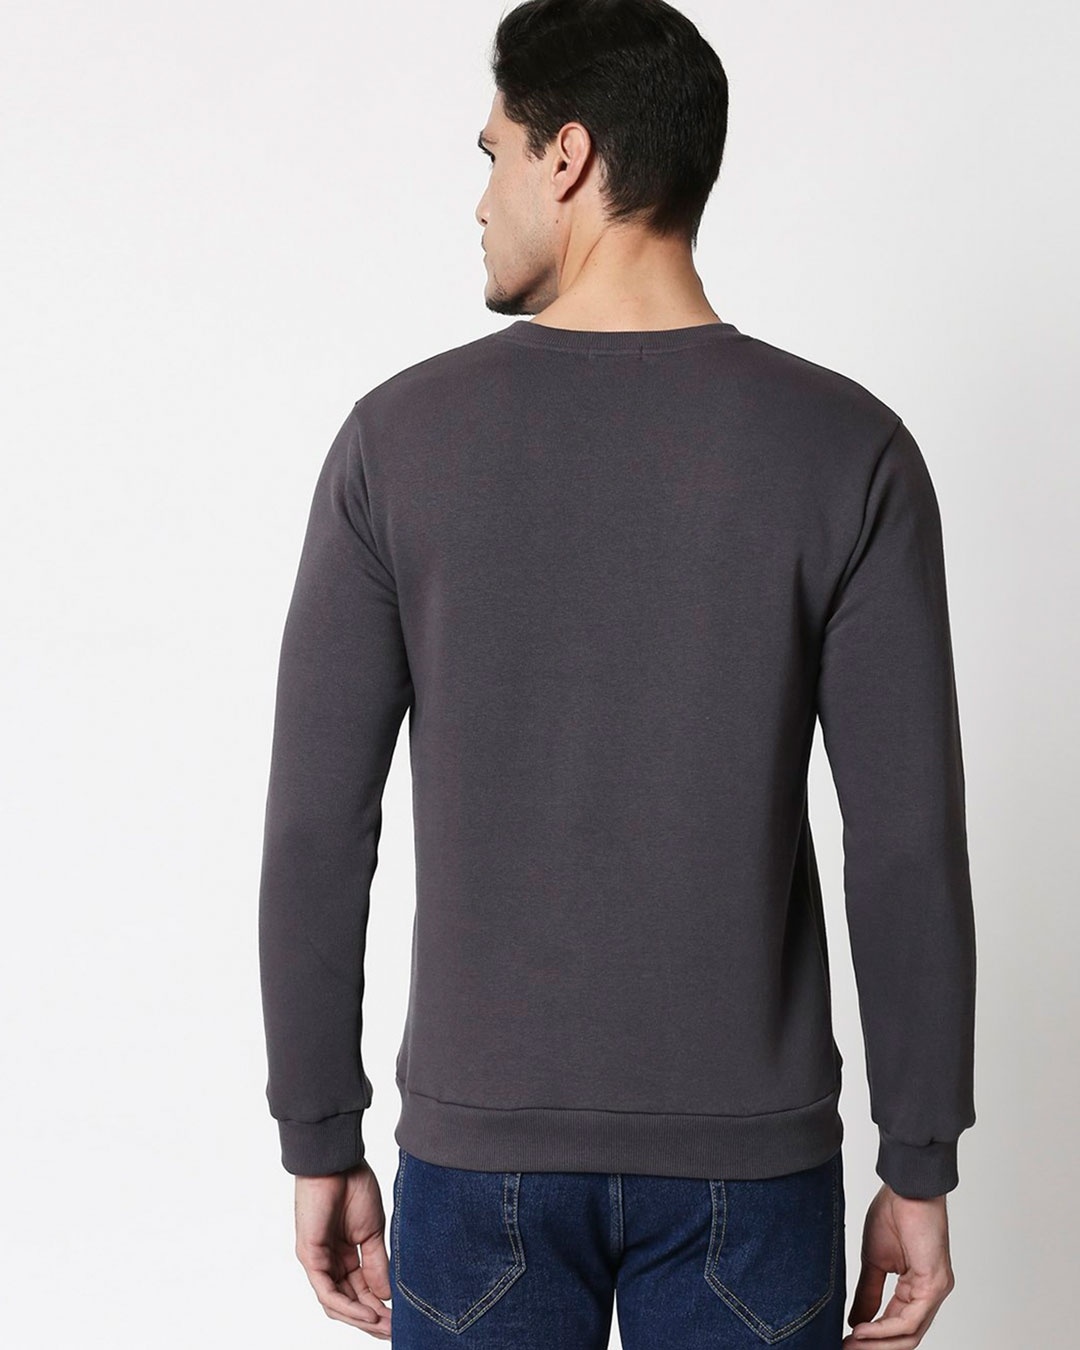 Shop Write Your Own Story Fleece Sweatshirt Nimbus Grey-Back